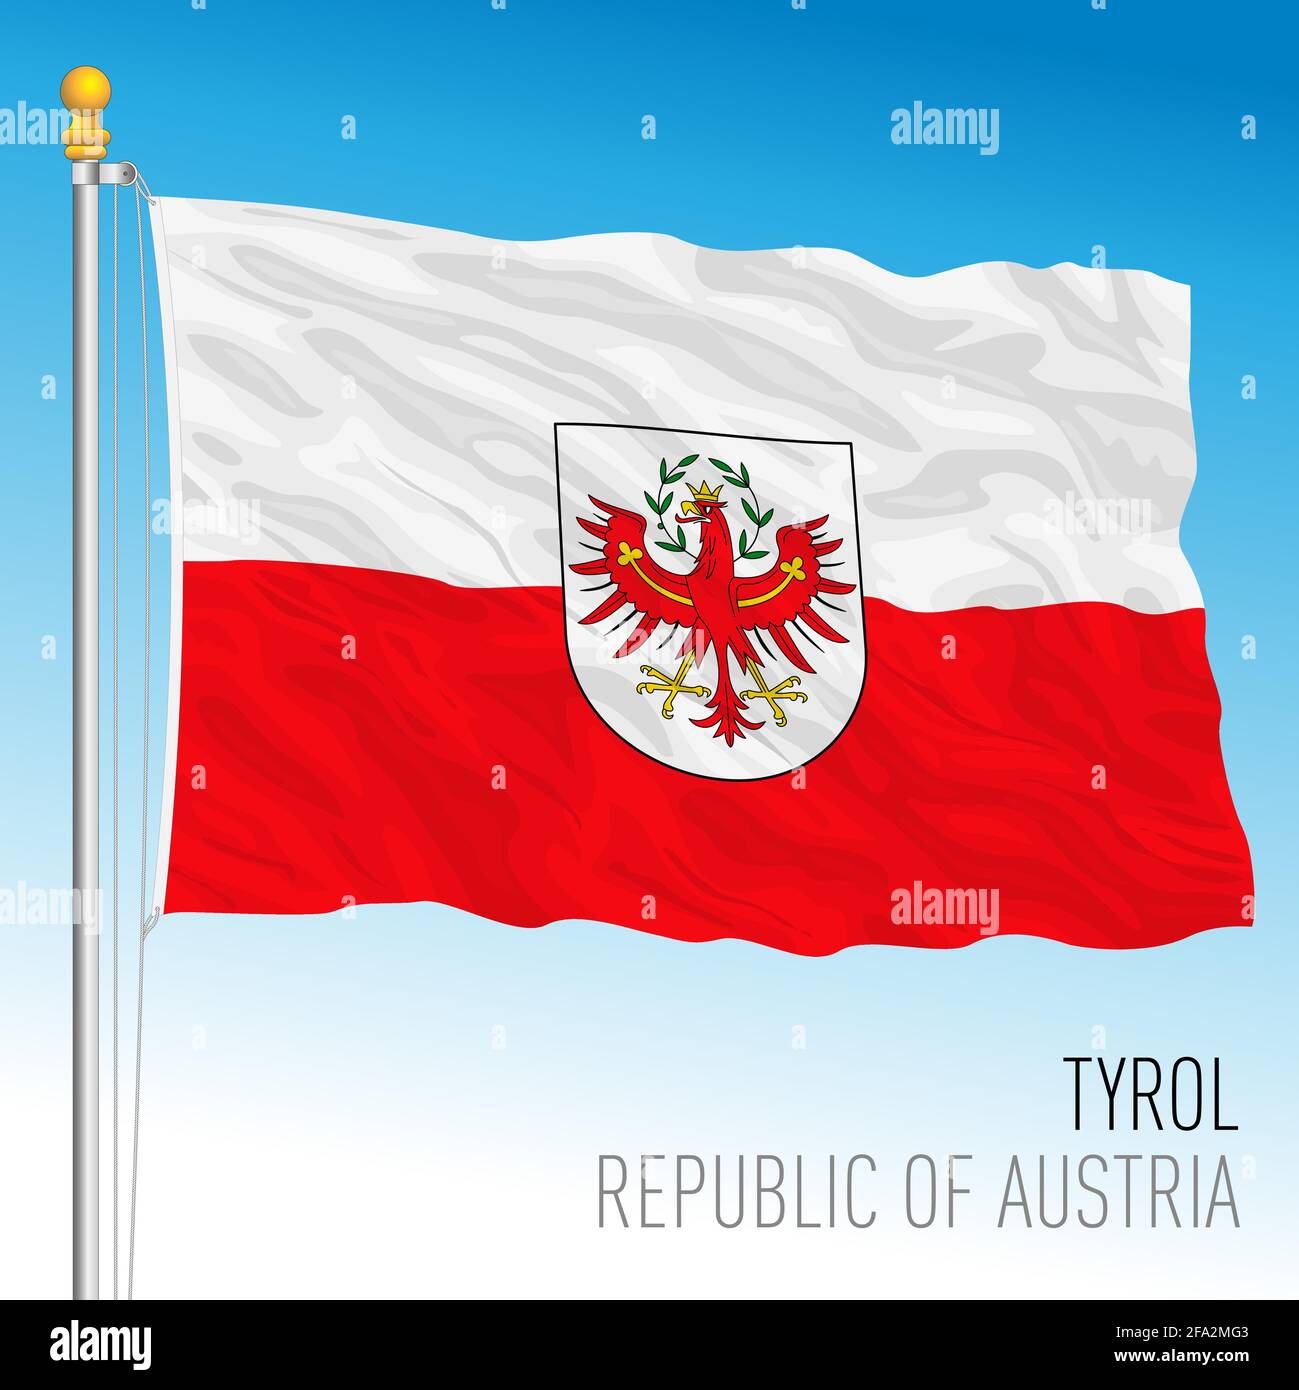 Tyrol official regional flag, land of Republic of Austria, vector illustration Stock Vector